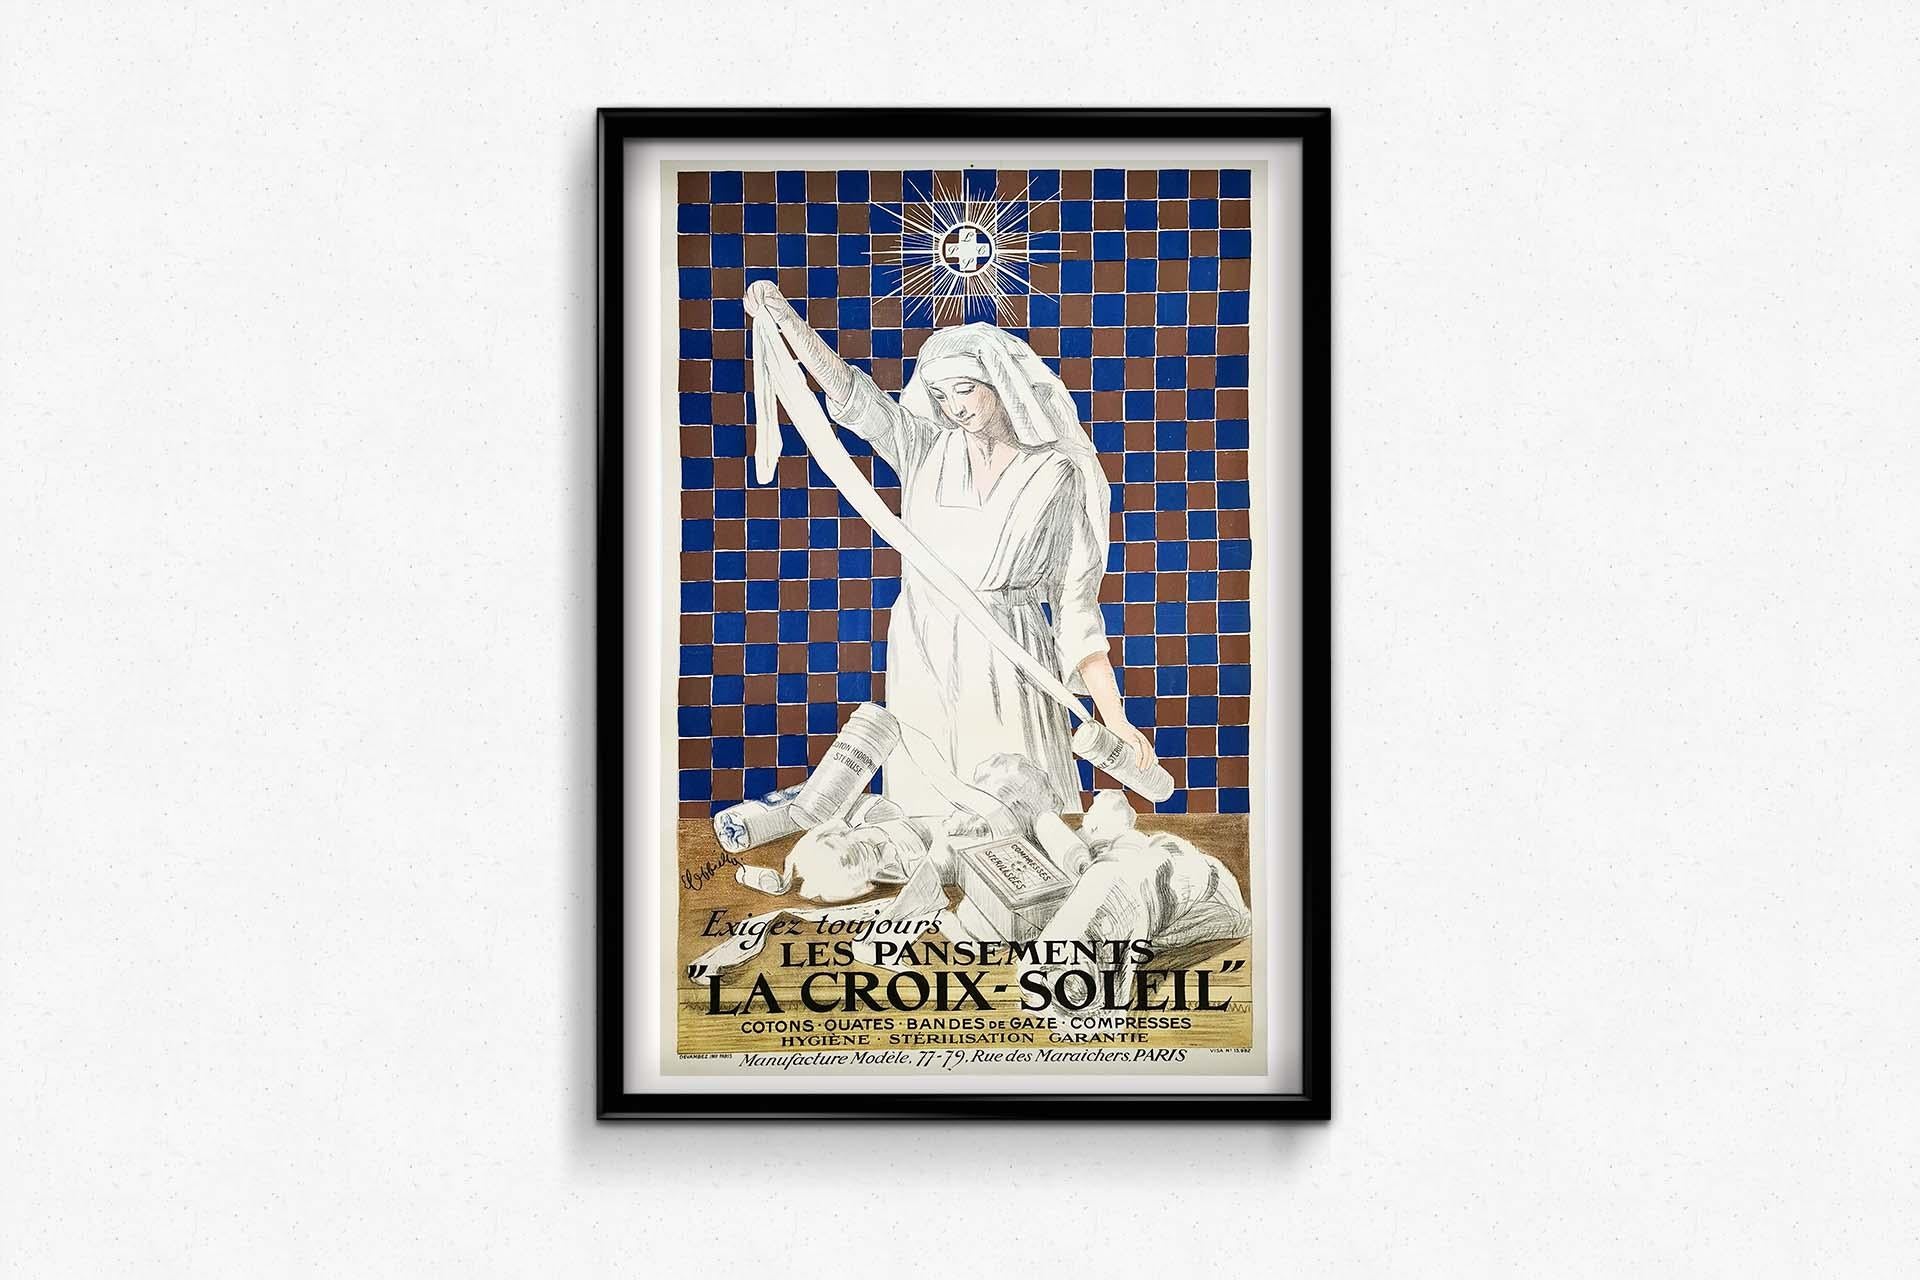 Originalplakat von Cappiello - Les Pansements, „La Croix Soleil“, ca. 1920 (Art déco), Print, von Leonetto Cappiello